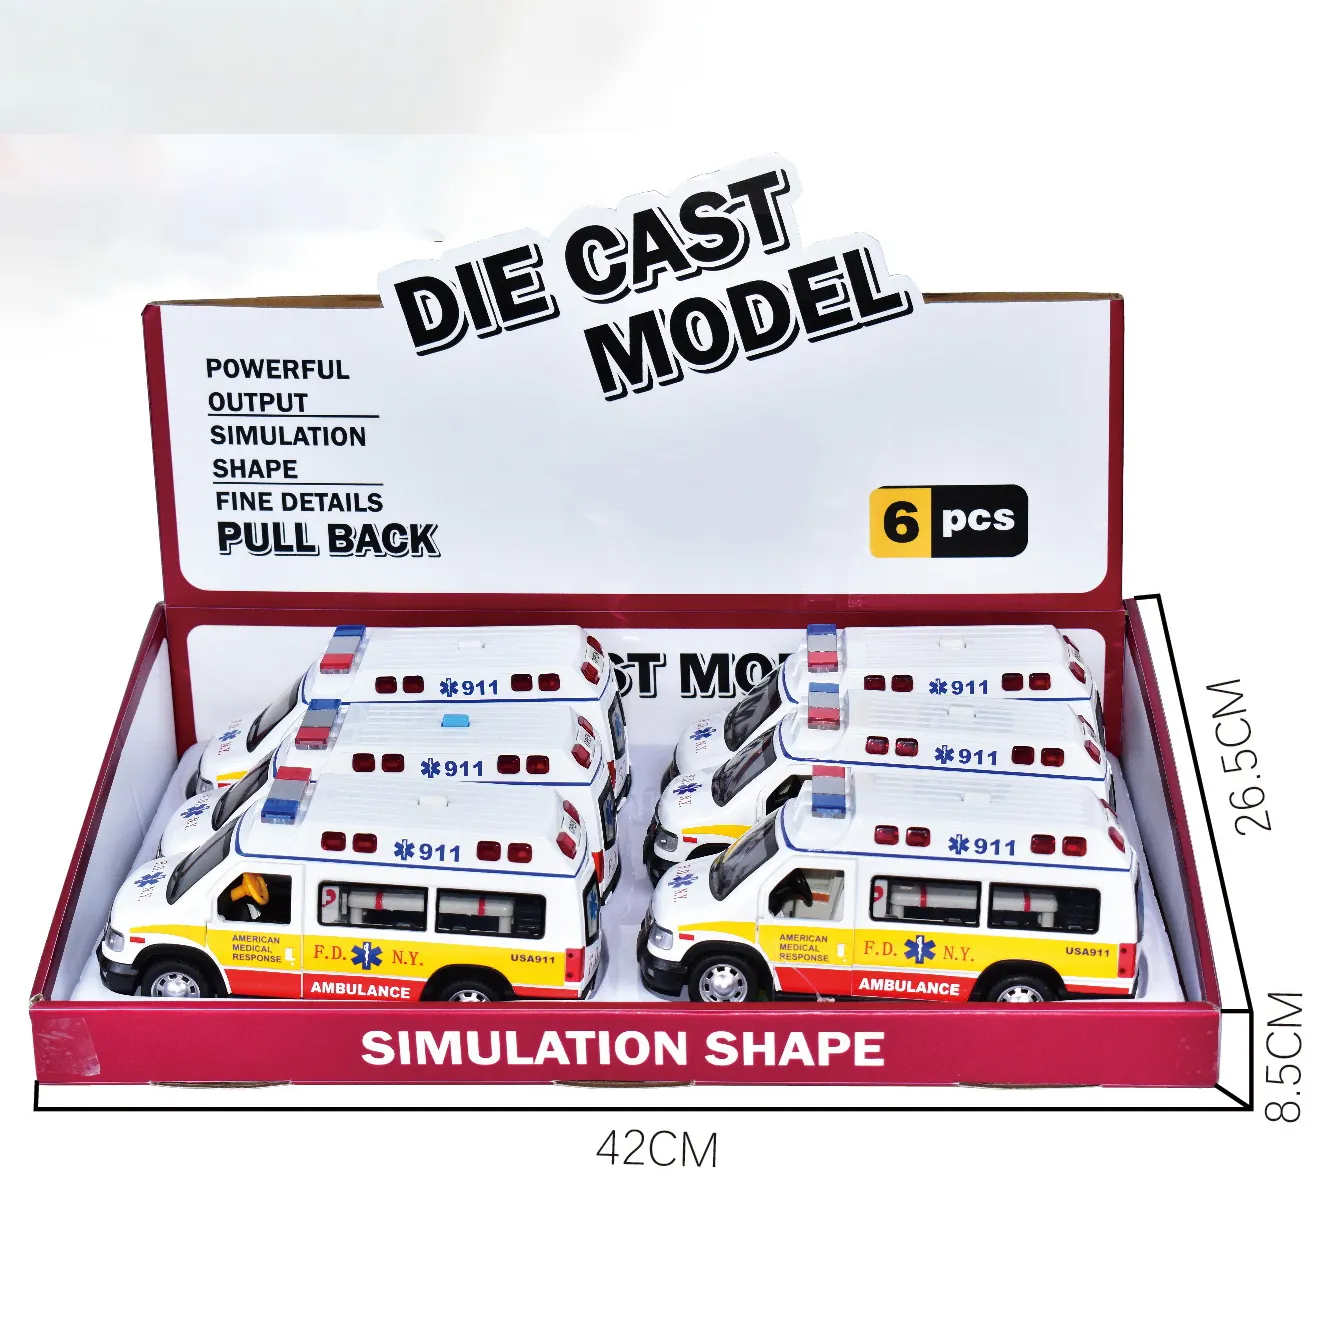 1 24 Modell Modell Druckguss Metall legierung Spielzeug Pull Back Auto American Ambulance Fahrzeug Modell Spielzeug Set für Kinder